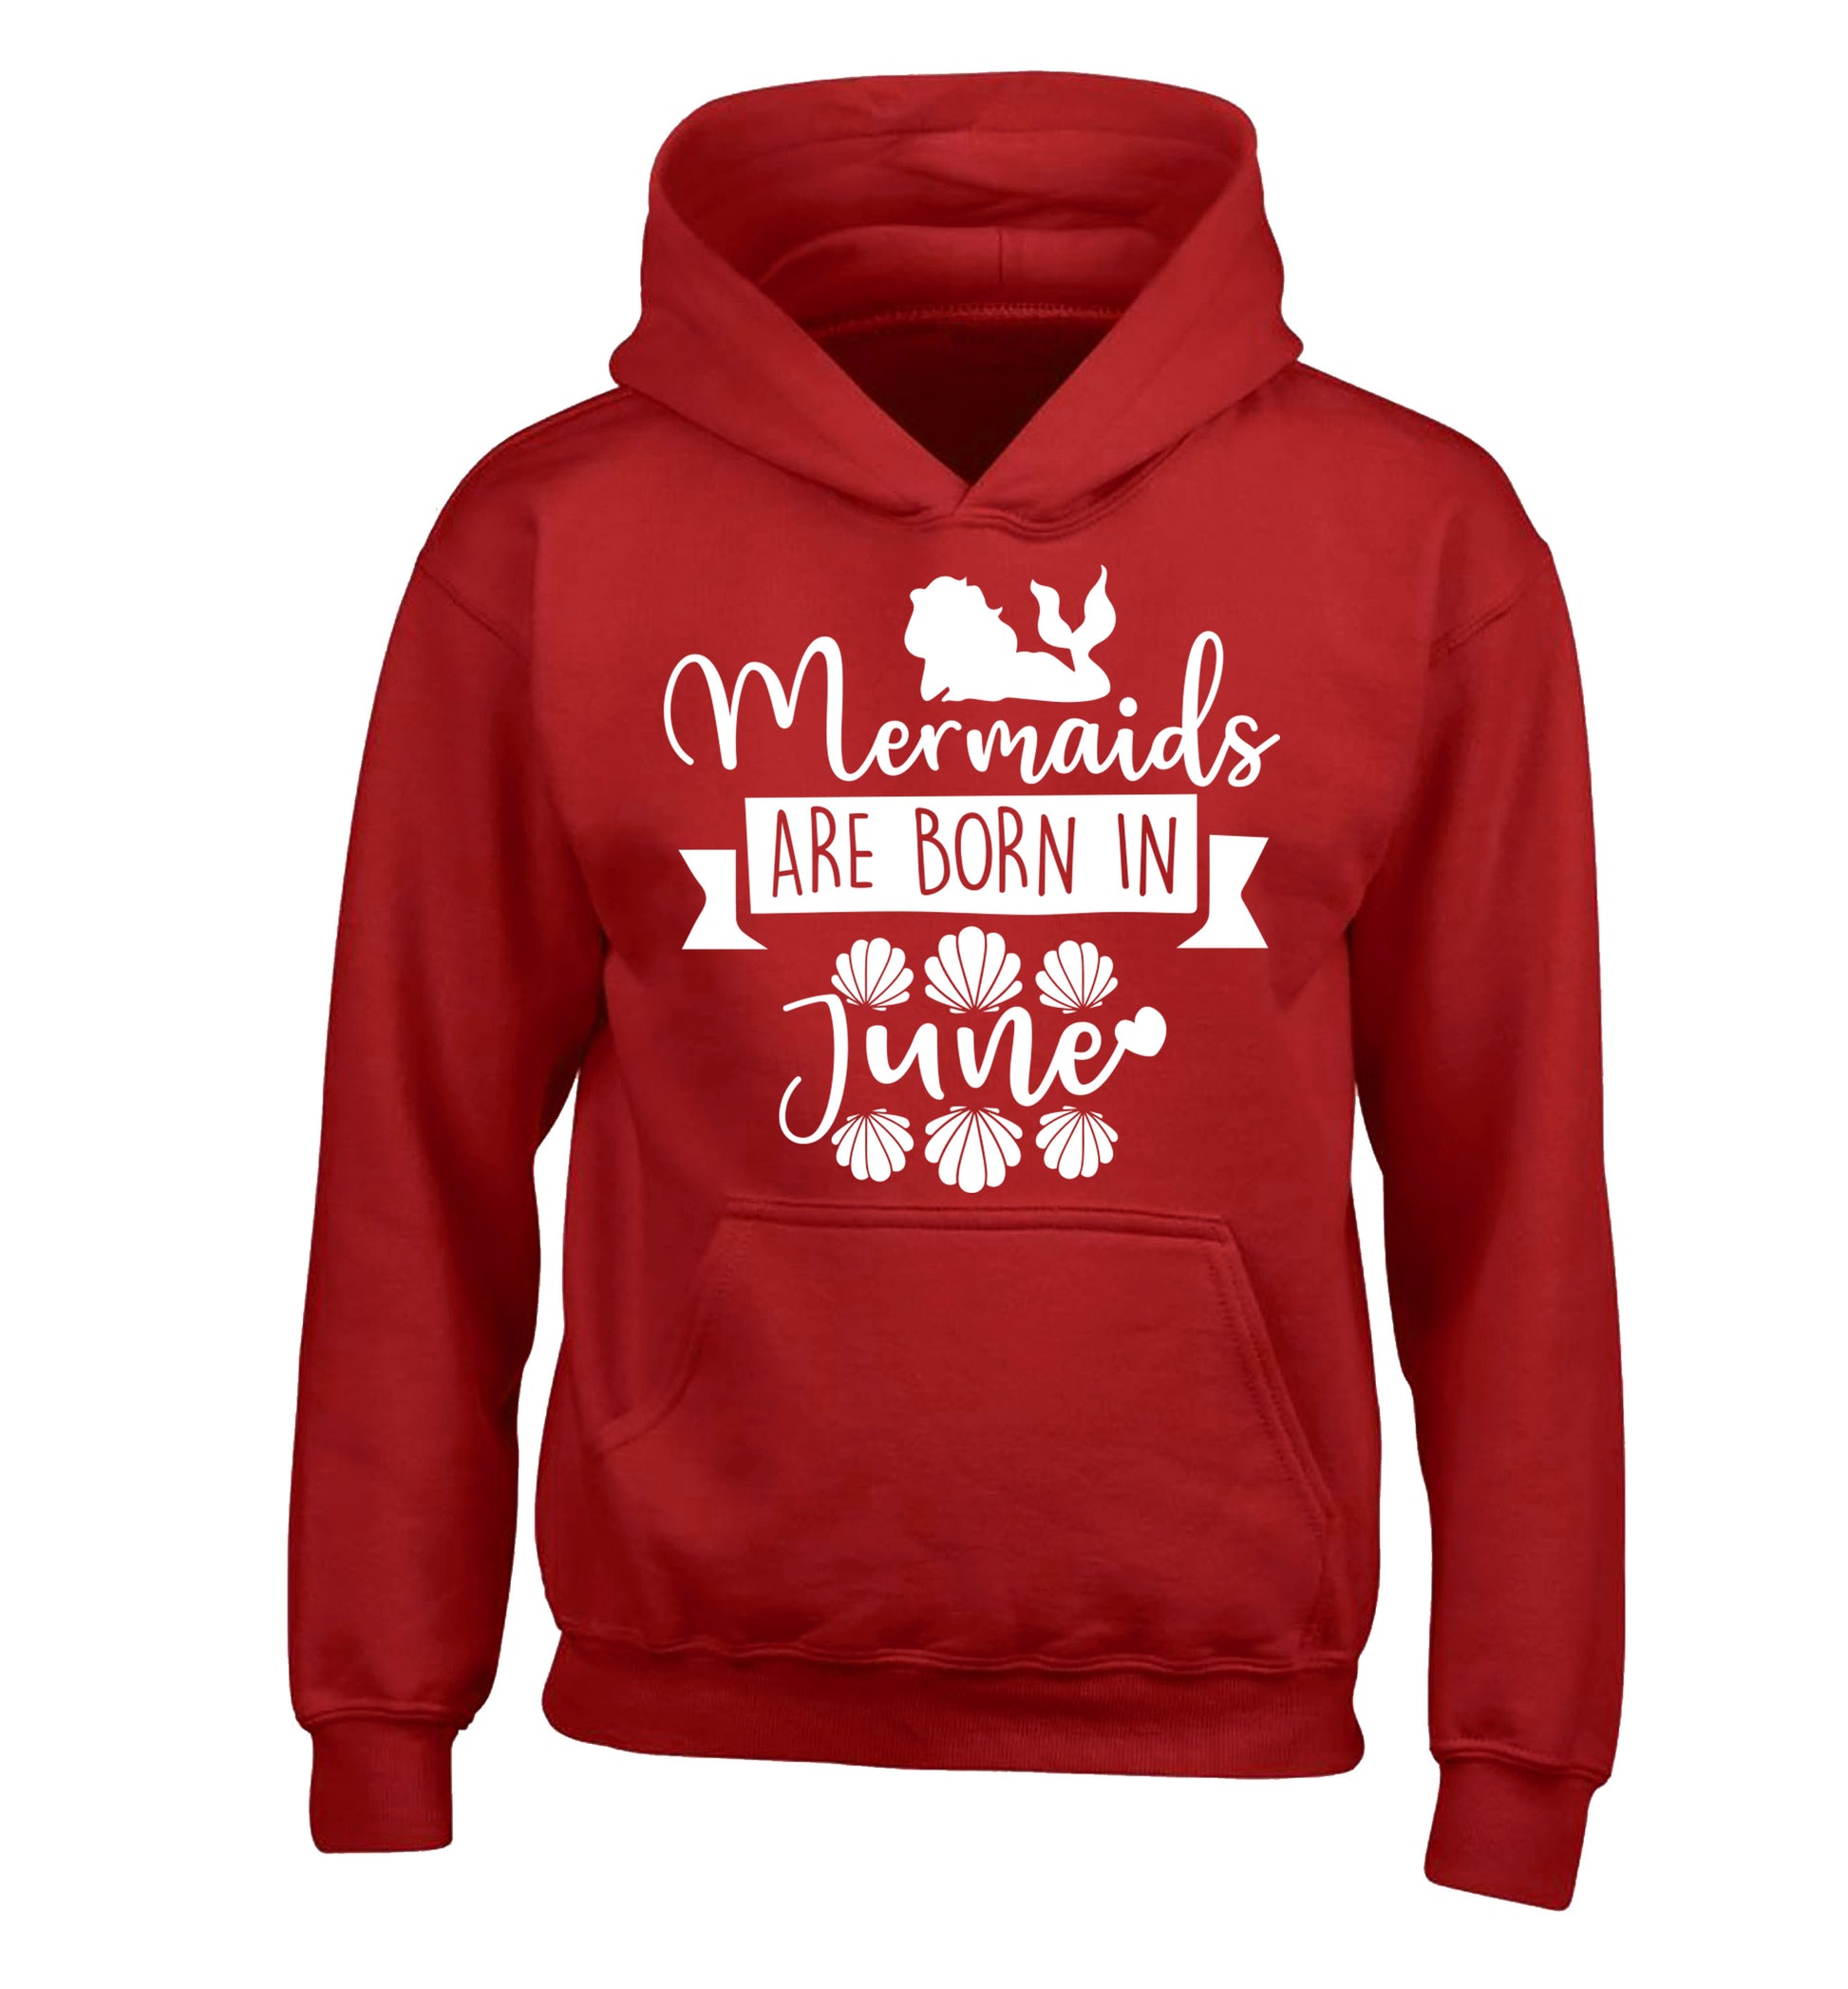 Mermaids are born in June children's red hoodie 12-13 Years